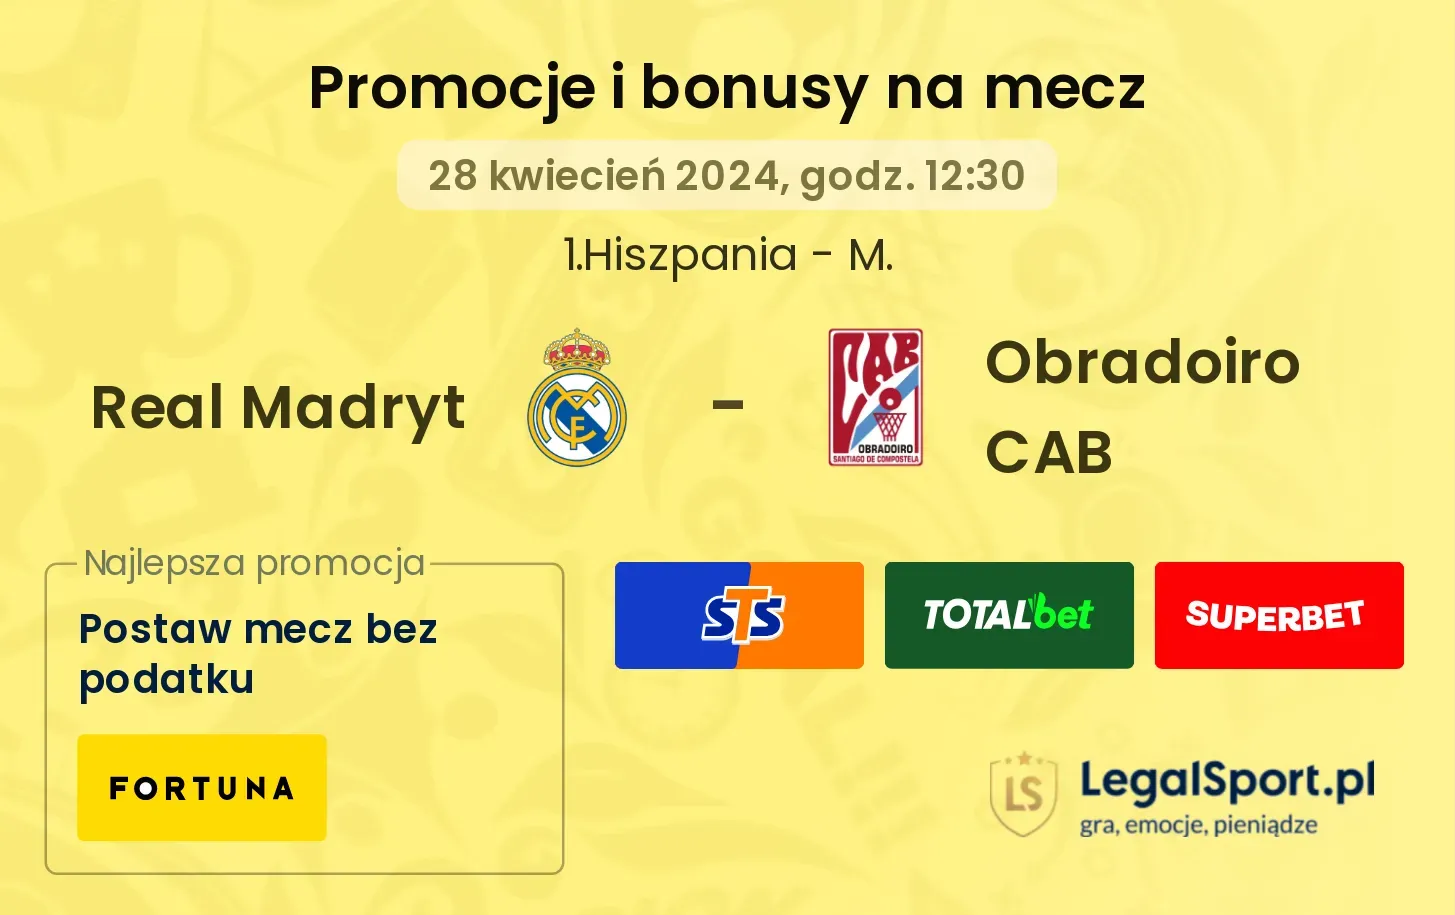 Real Madryt - Obradoiro CAB promocje i bonusy (28.04, 12:30)